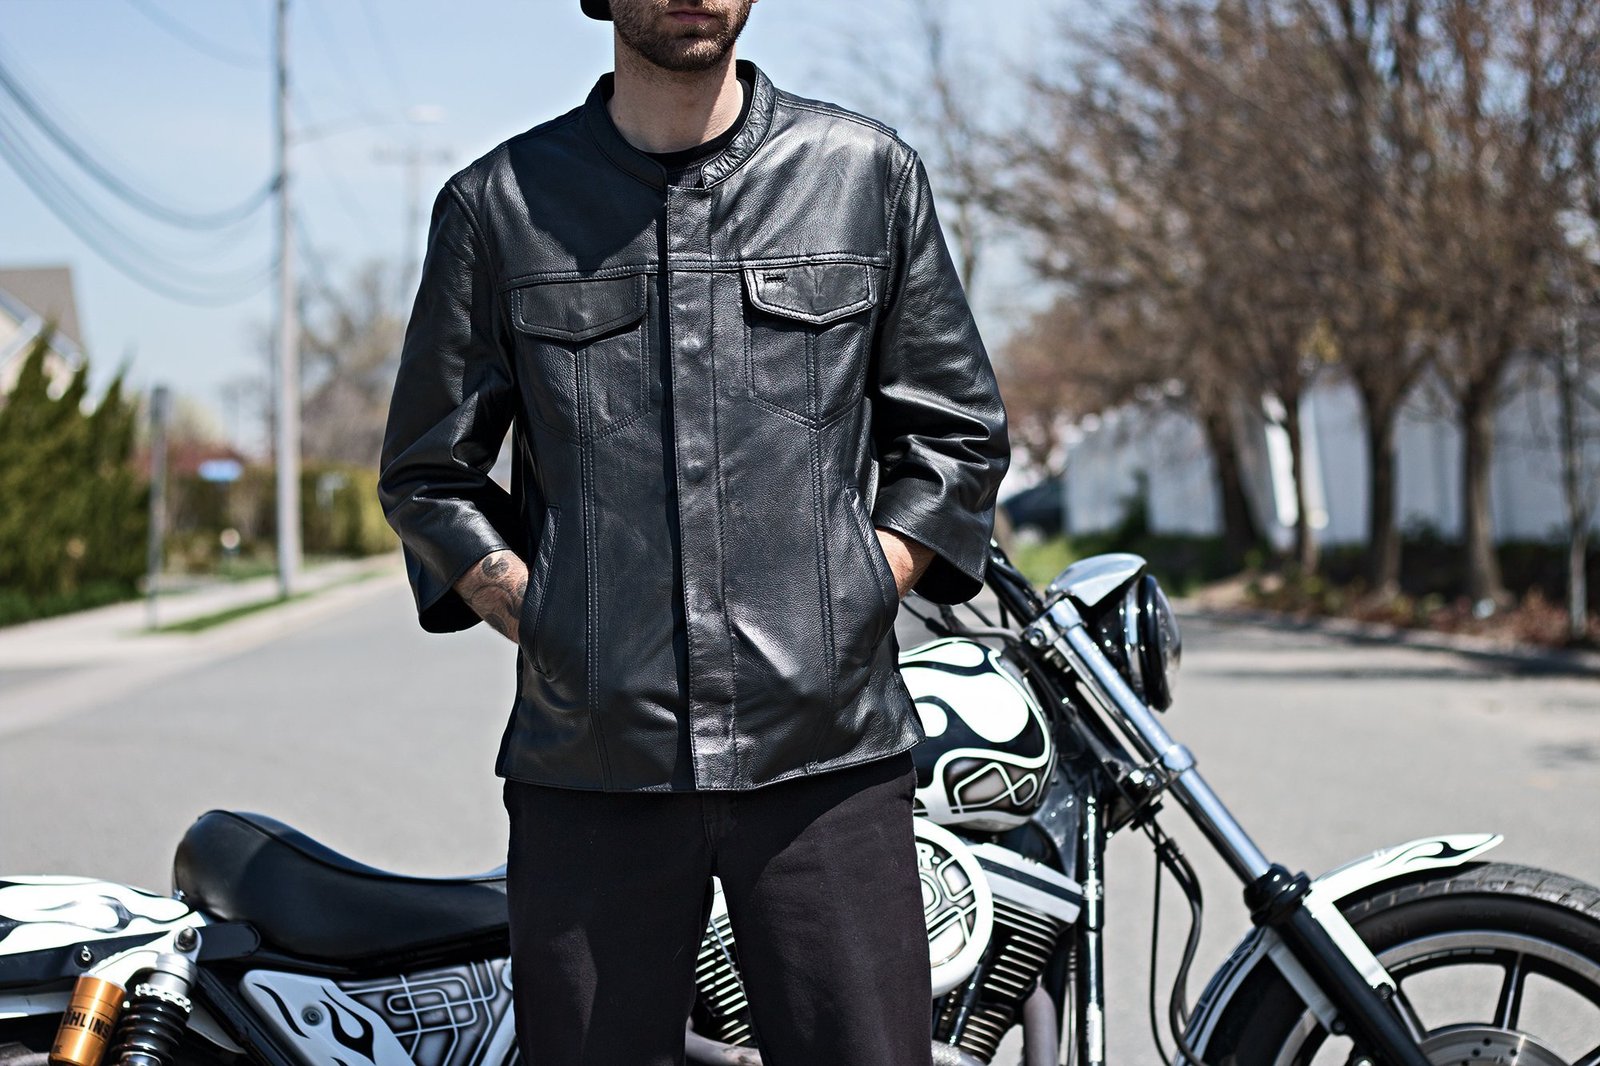 Leather Shirt - Men's - 3/4 Sleeves - Up To Size 5X - Mesa - FIM419CDM-FM